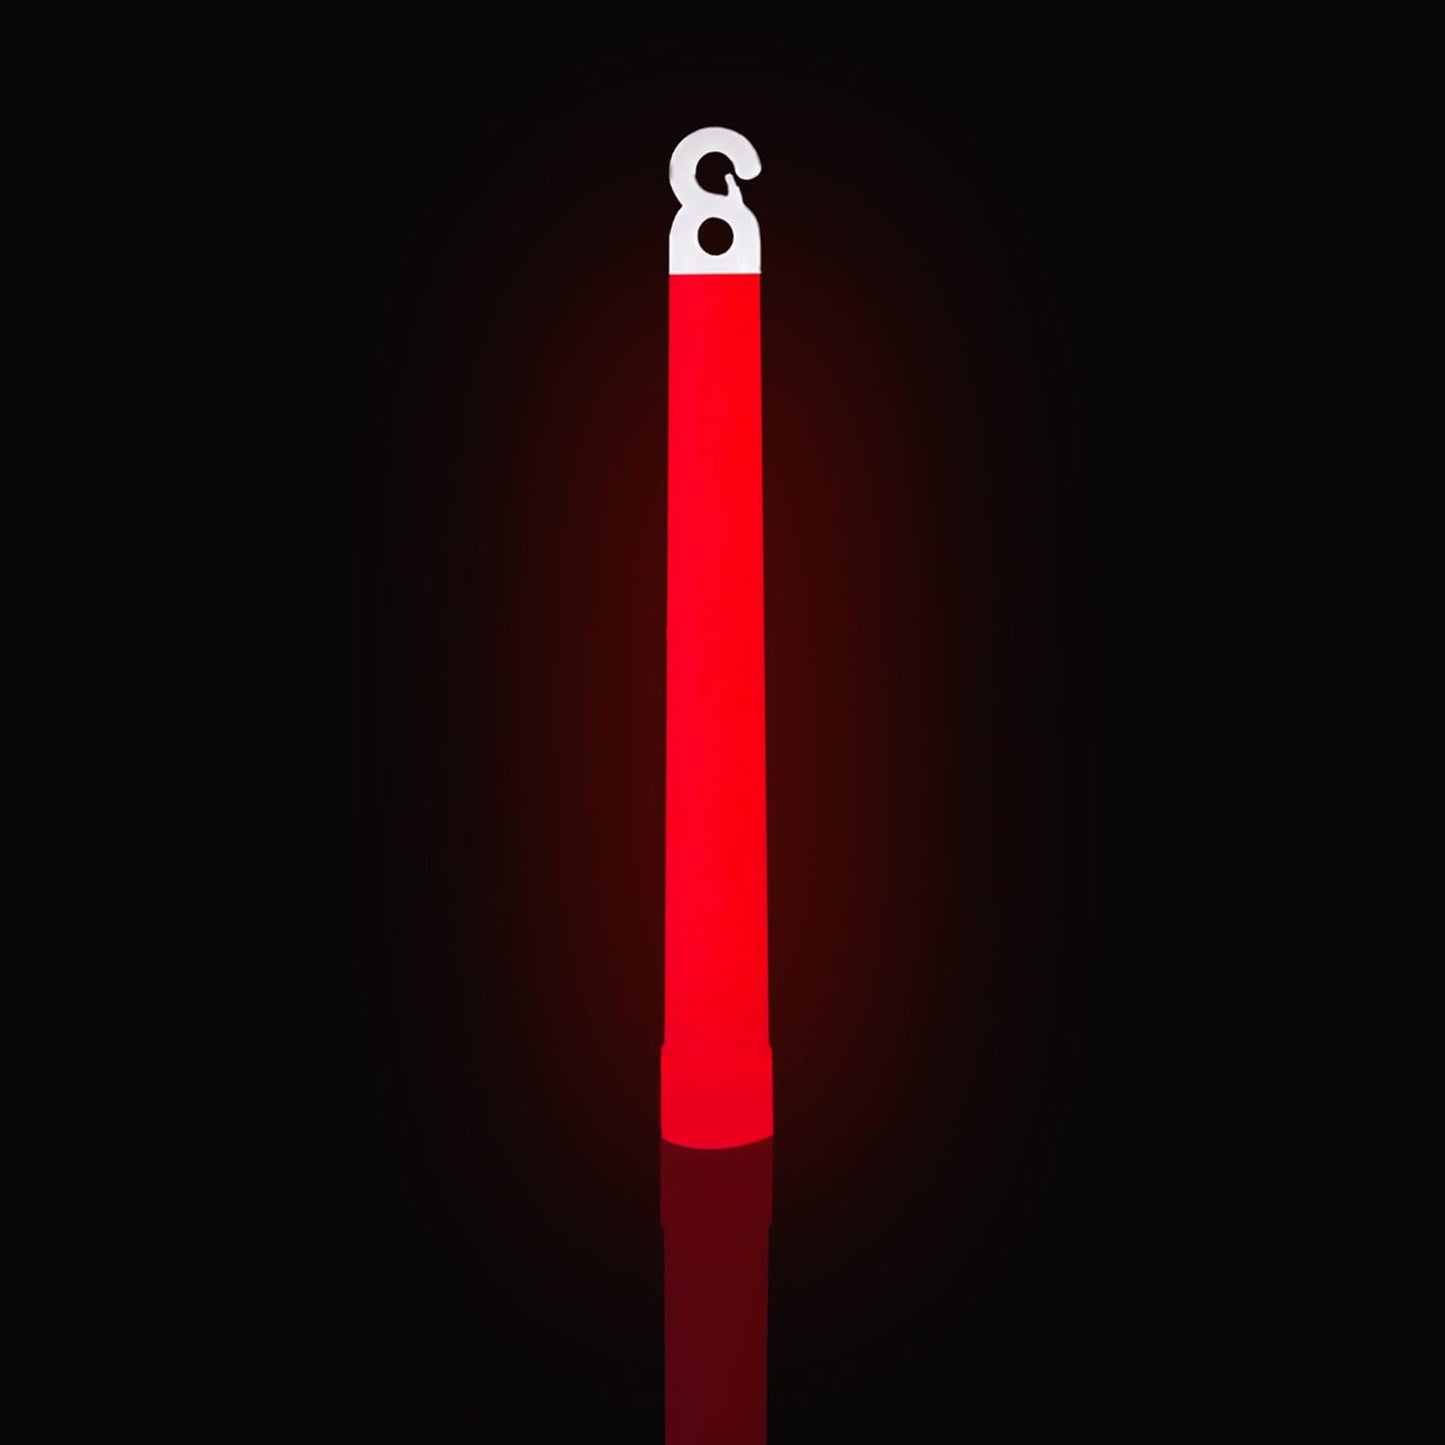 Be Ready Red Glow Sticks - Industrial Grade 12 Hour Illumination Emergency Safety Chemical Light Glow Sticks